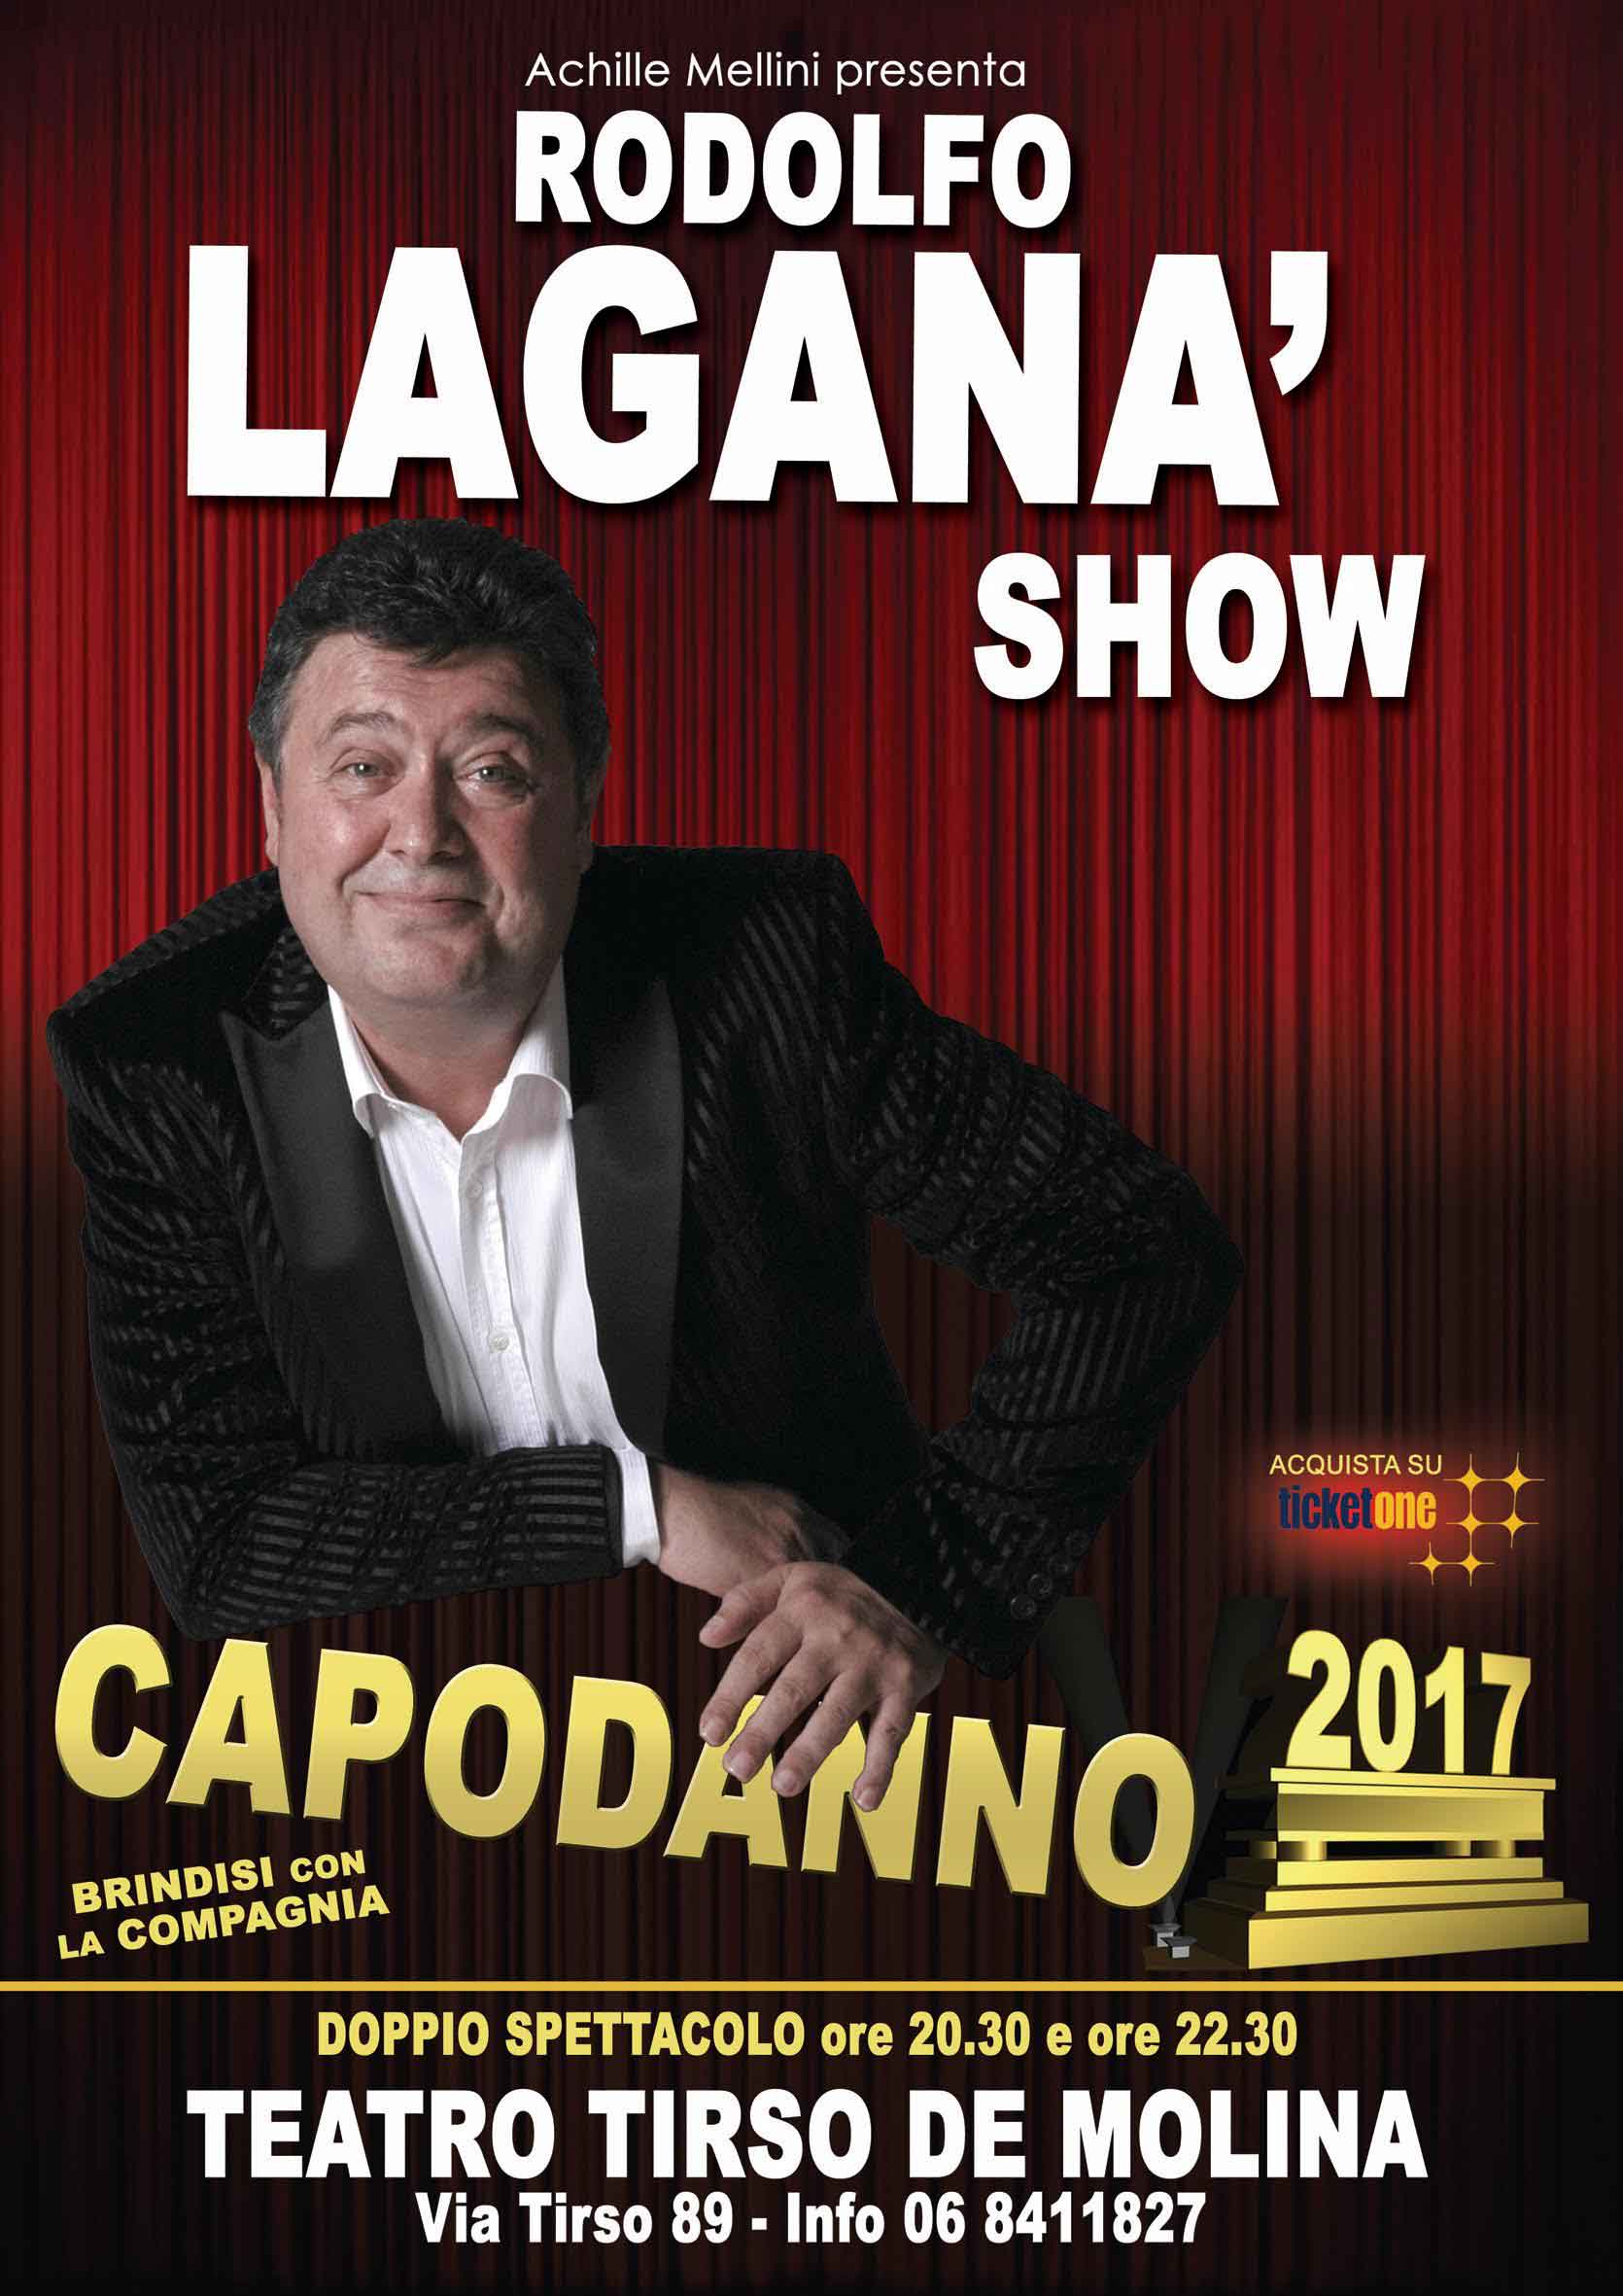 Rodolfo Laganà Show